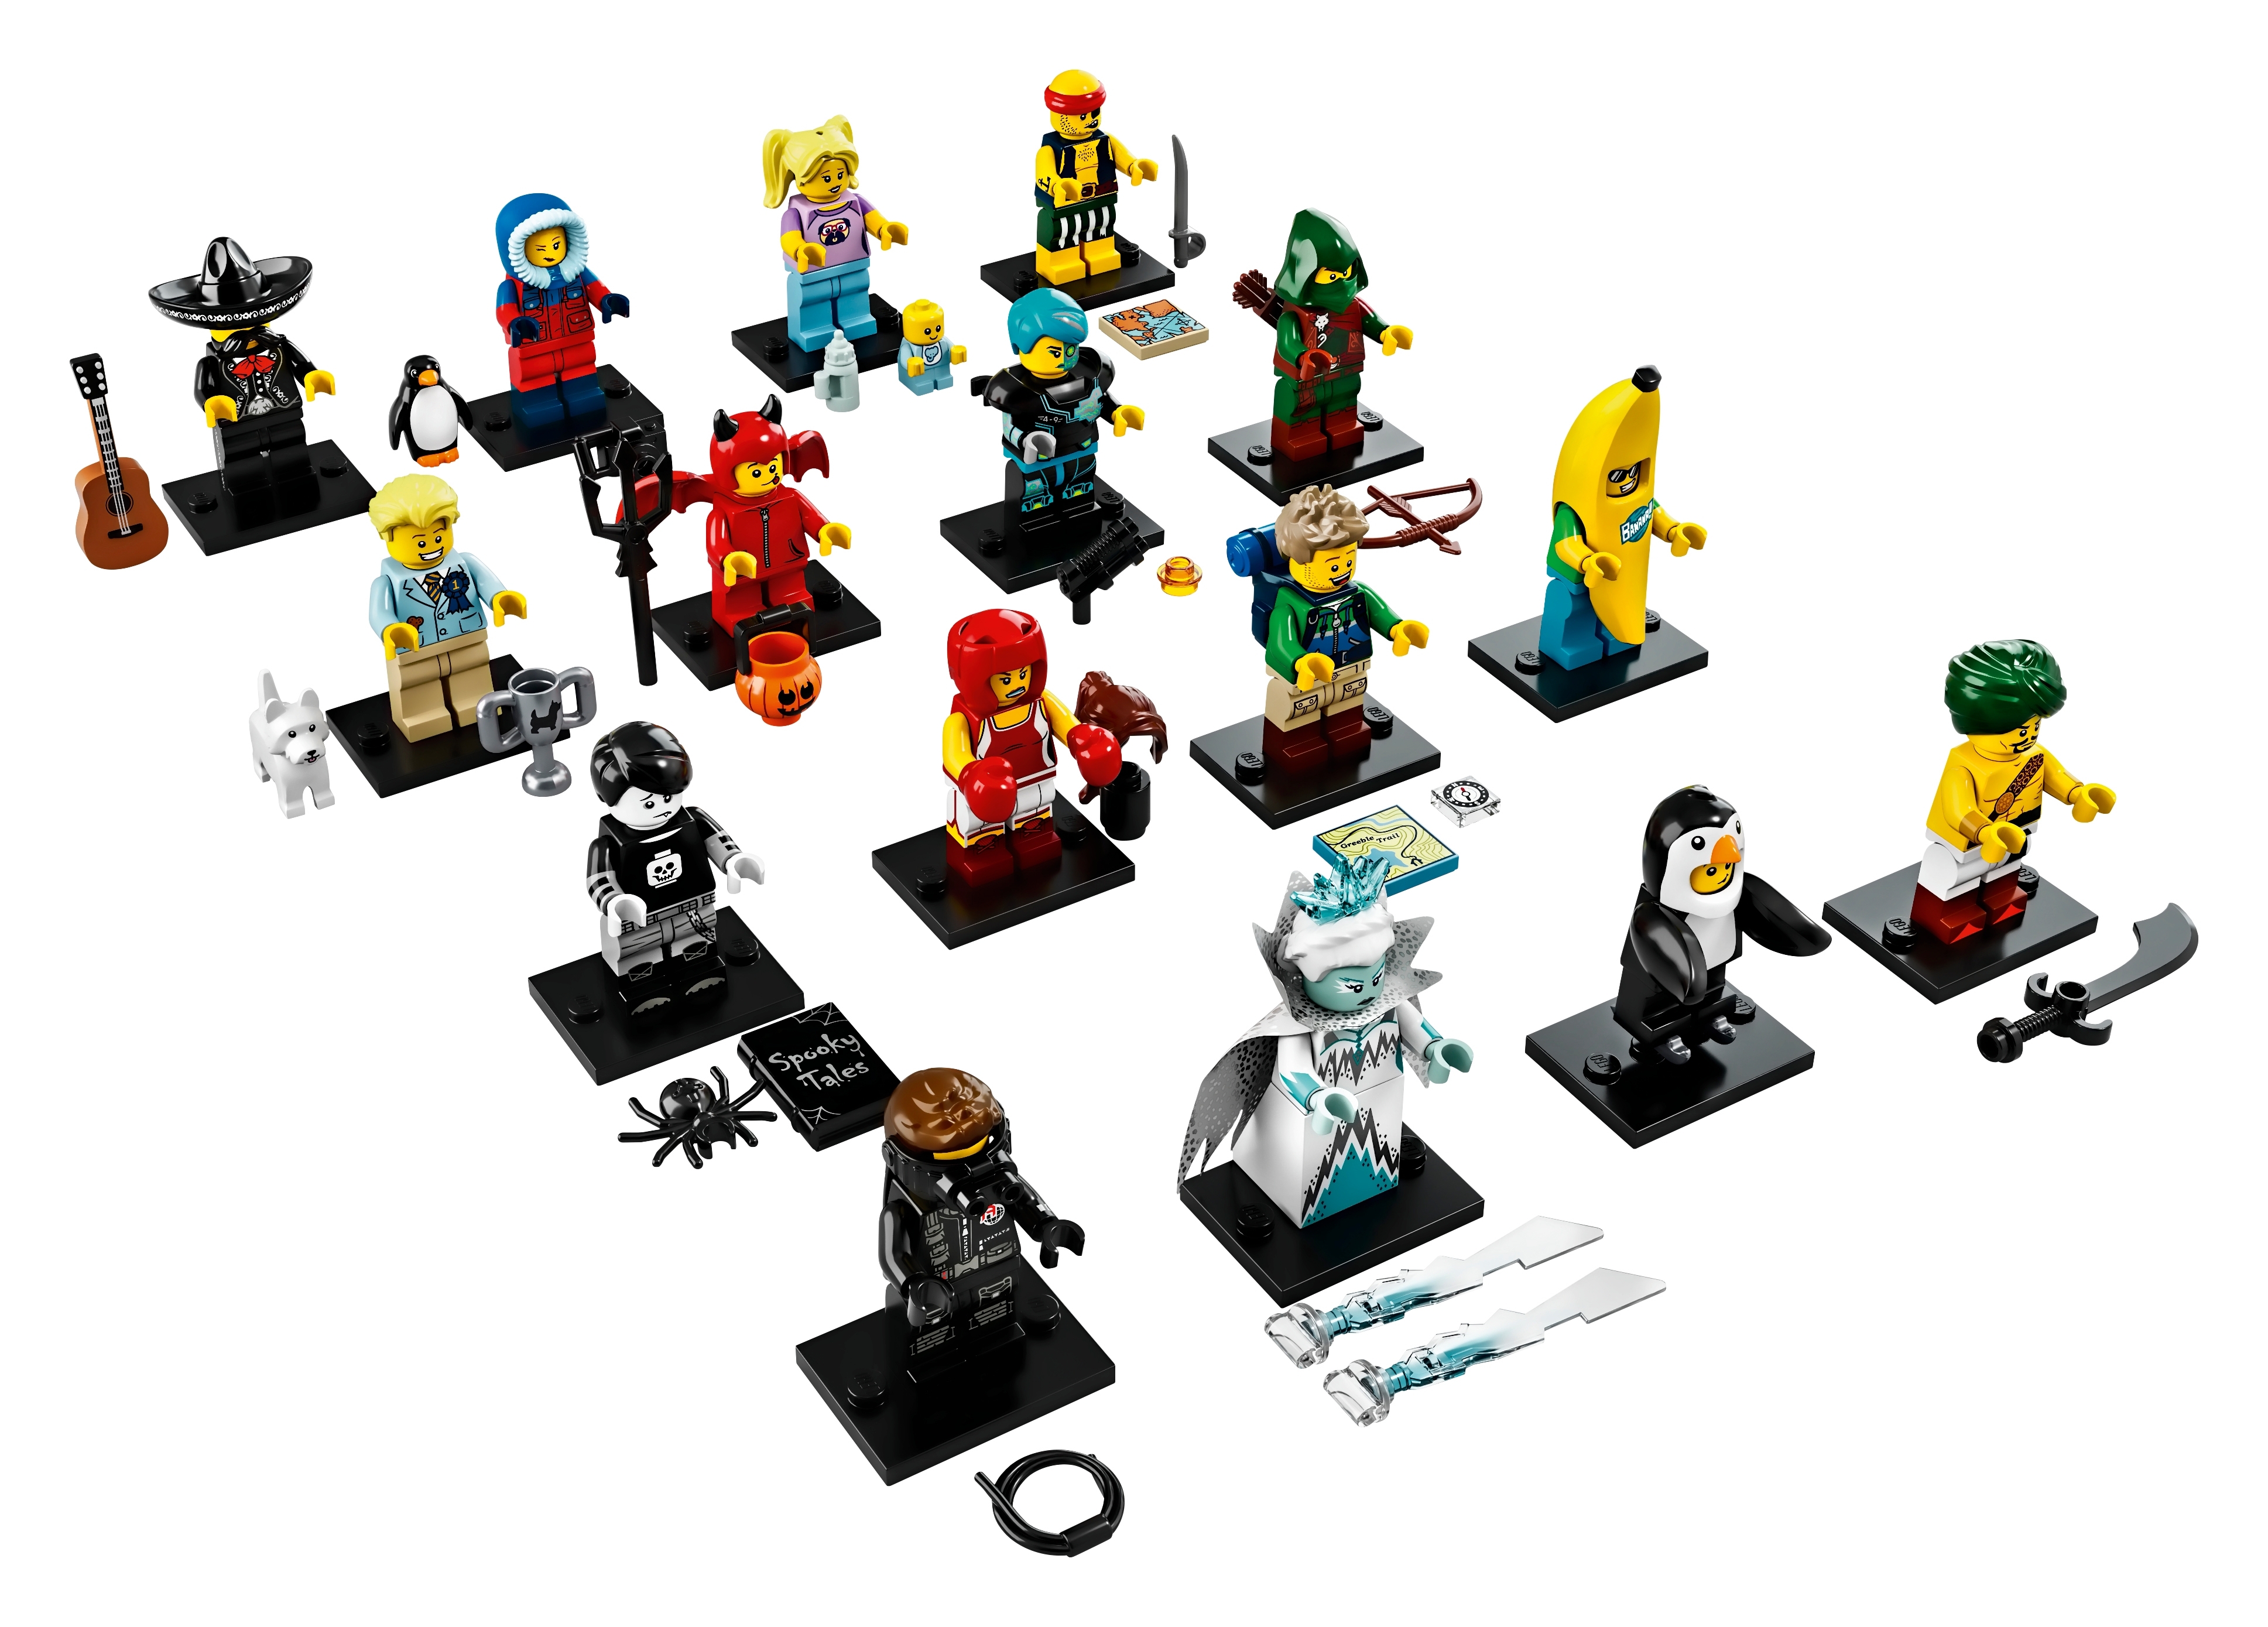 LEGO 71013 Minifigures Series 16 Ice Queen #1 for sale online